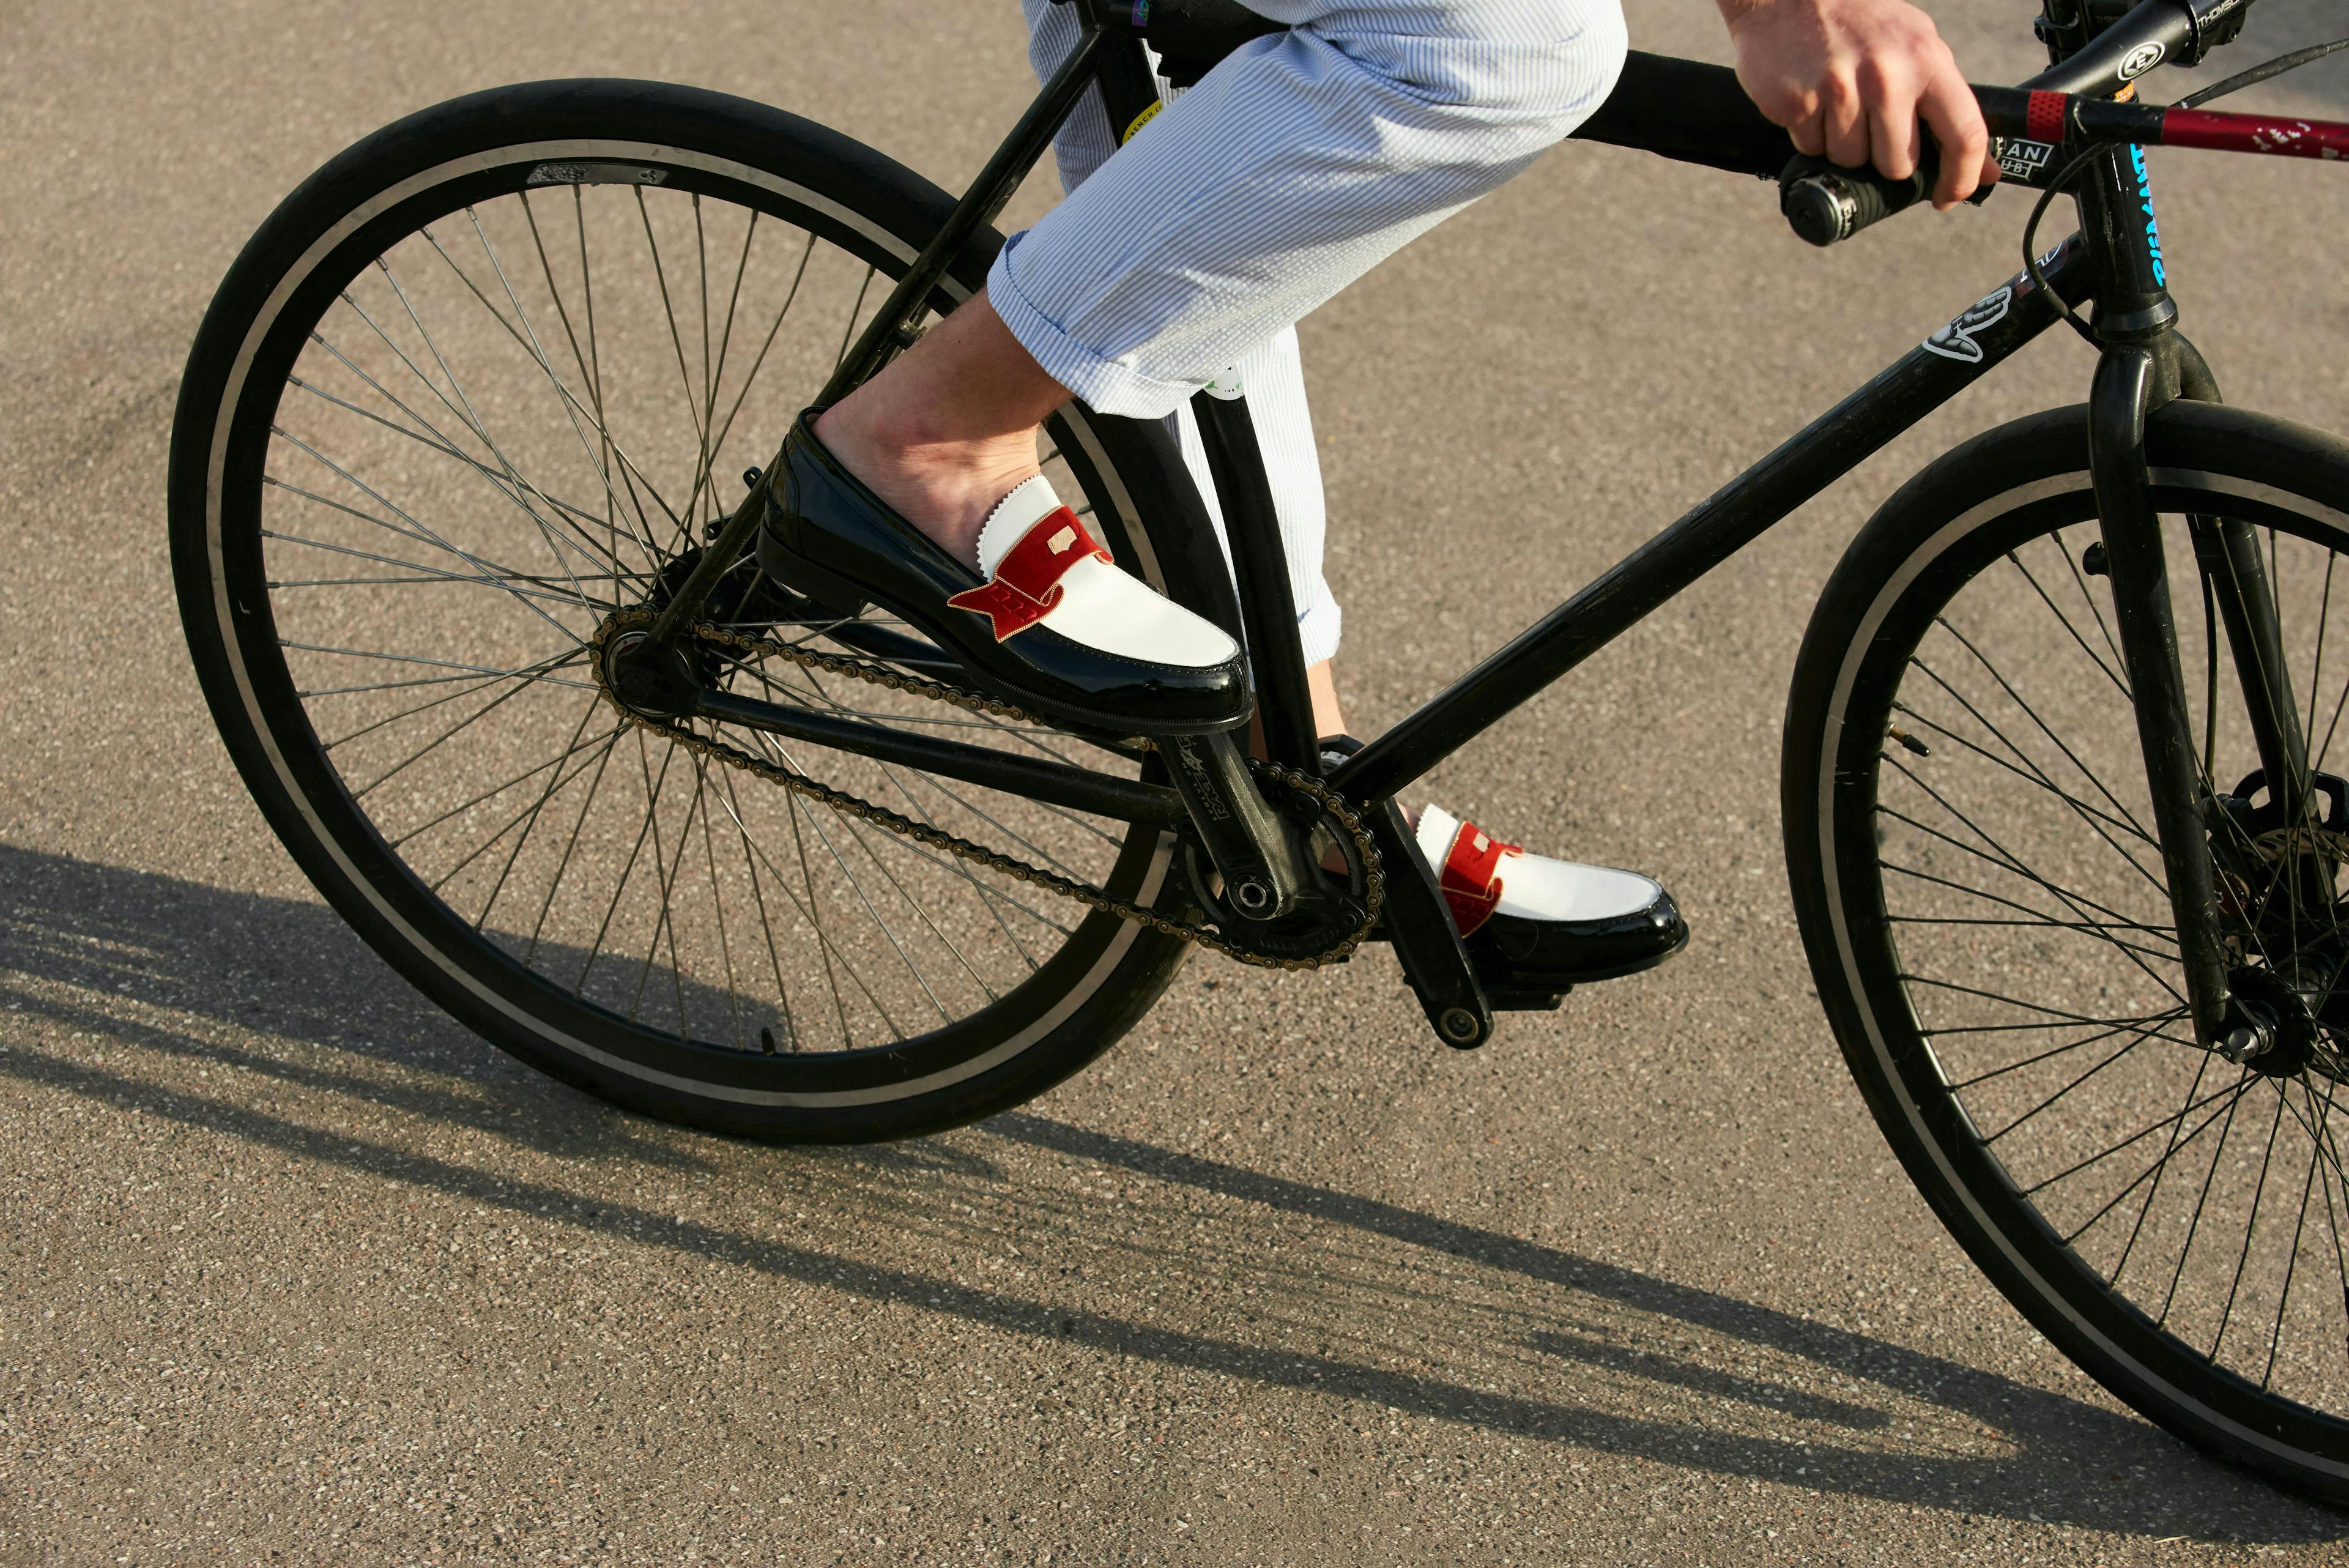 wheel machine bicycle bike vehicle transportation person human